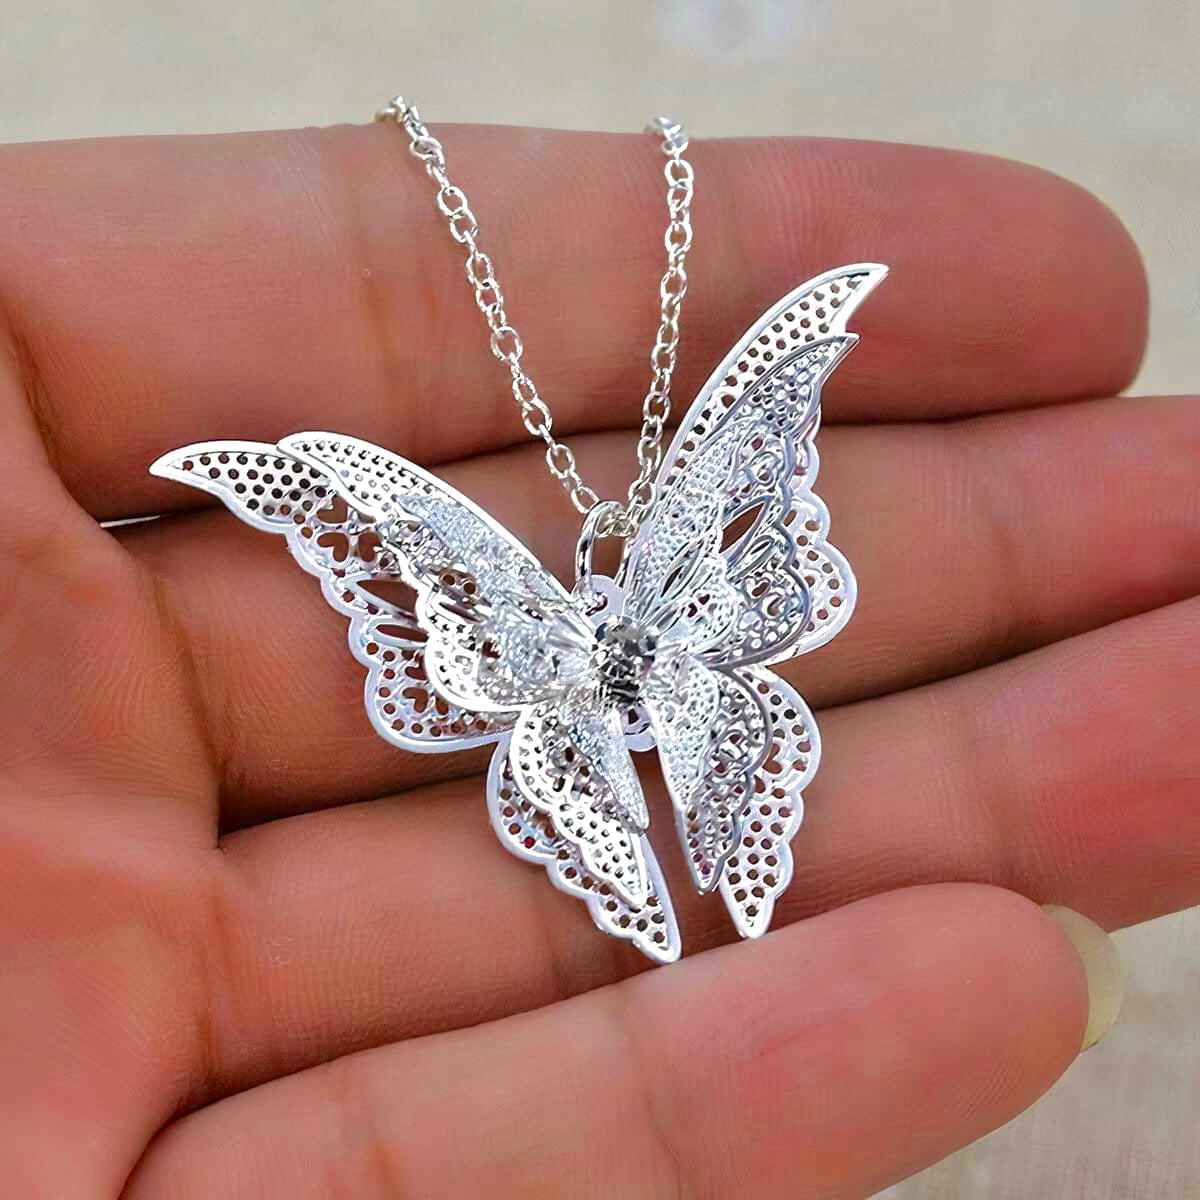 3D Butterfly Pendant Necklace